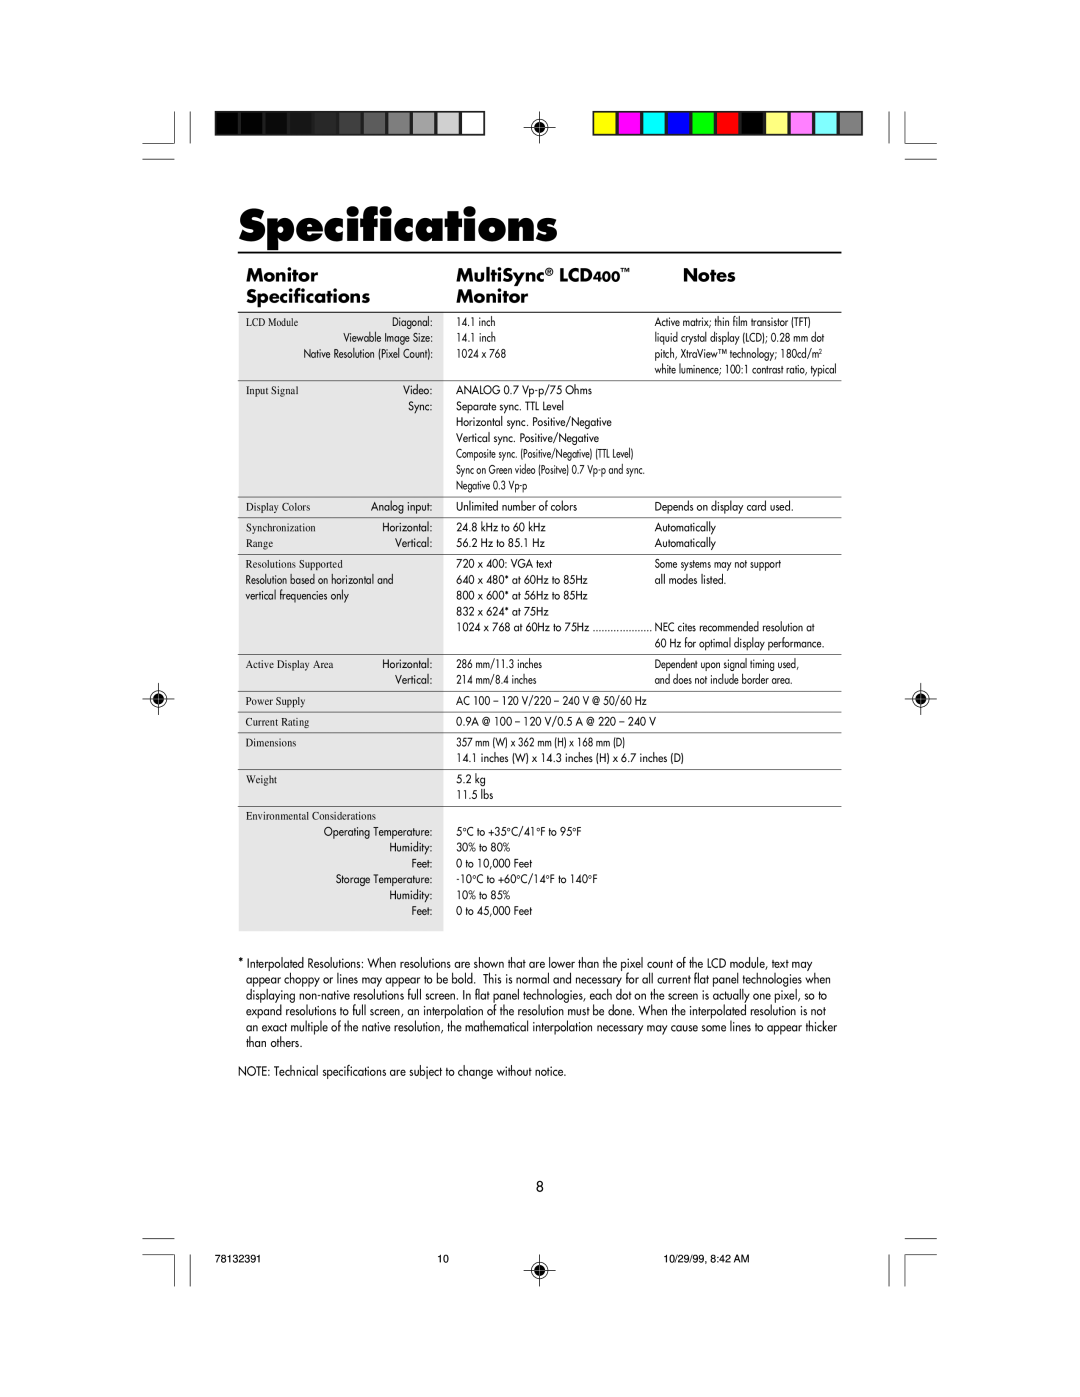 NEC user manual Specifications, Monitor, MultiSync LCD400 